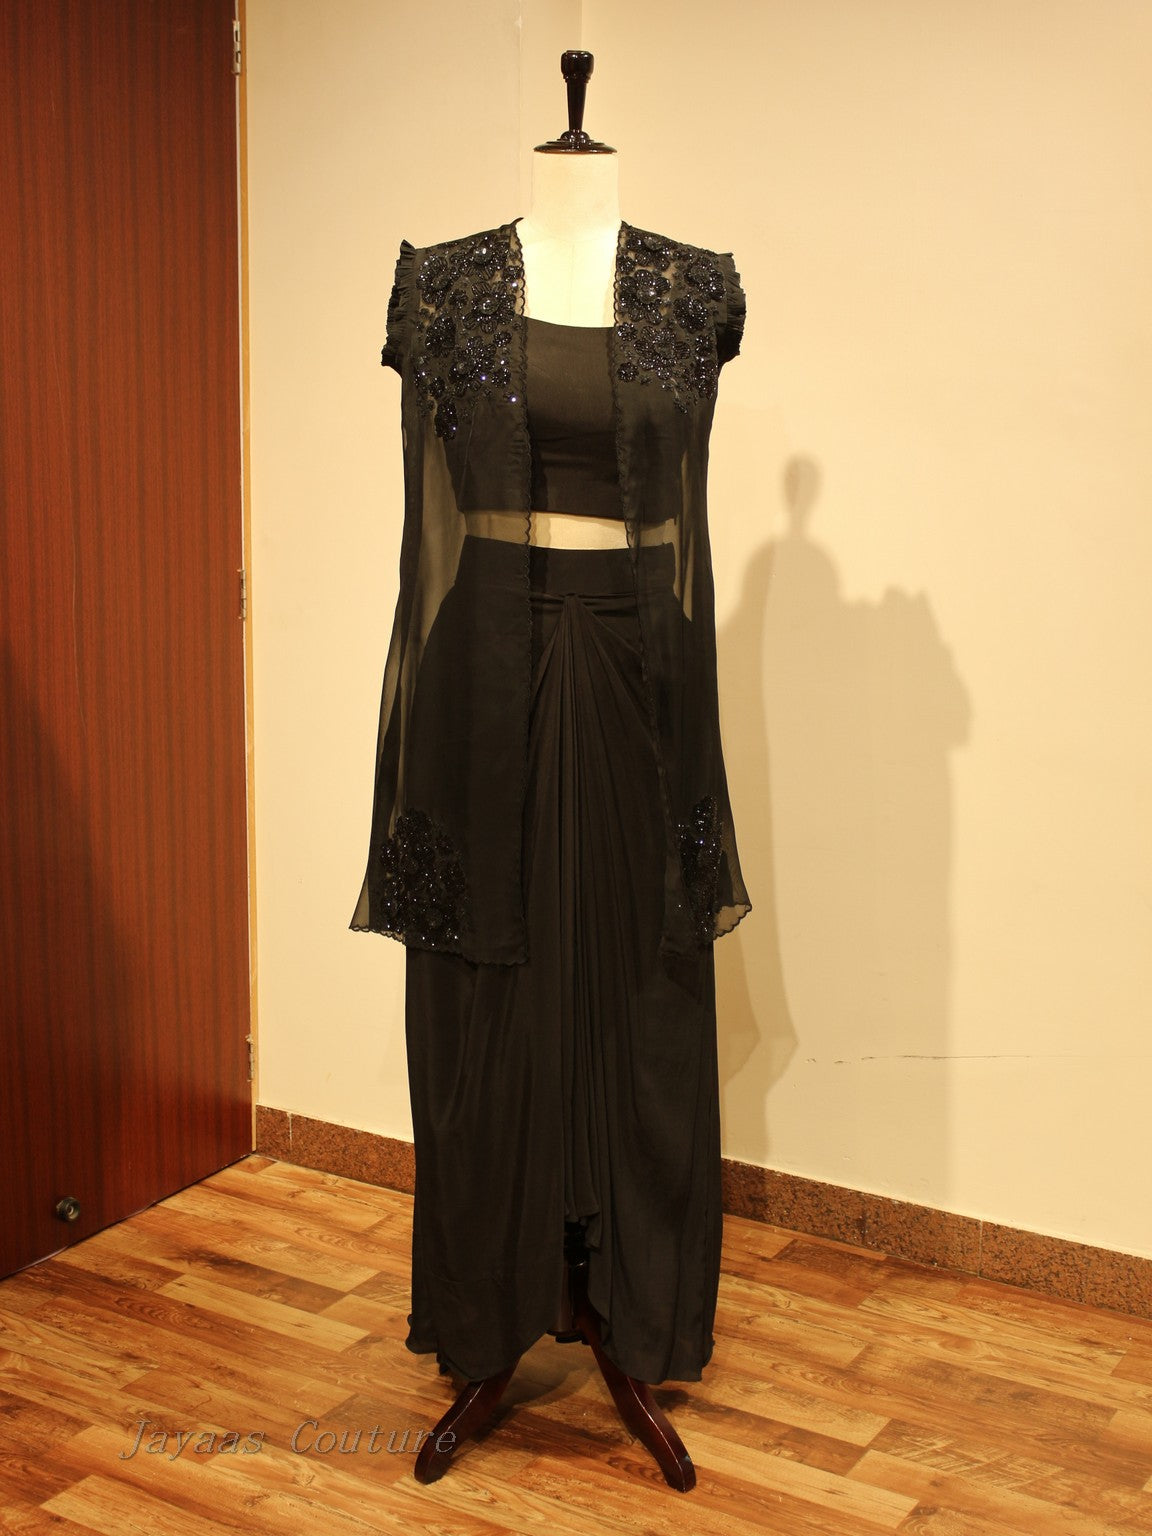 Black drape dress with cape